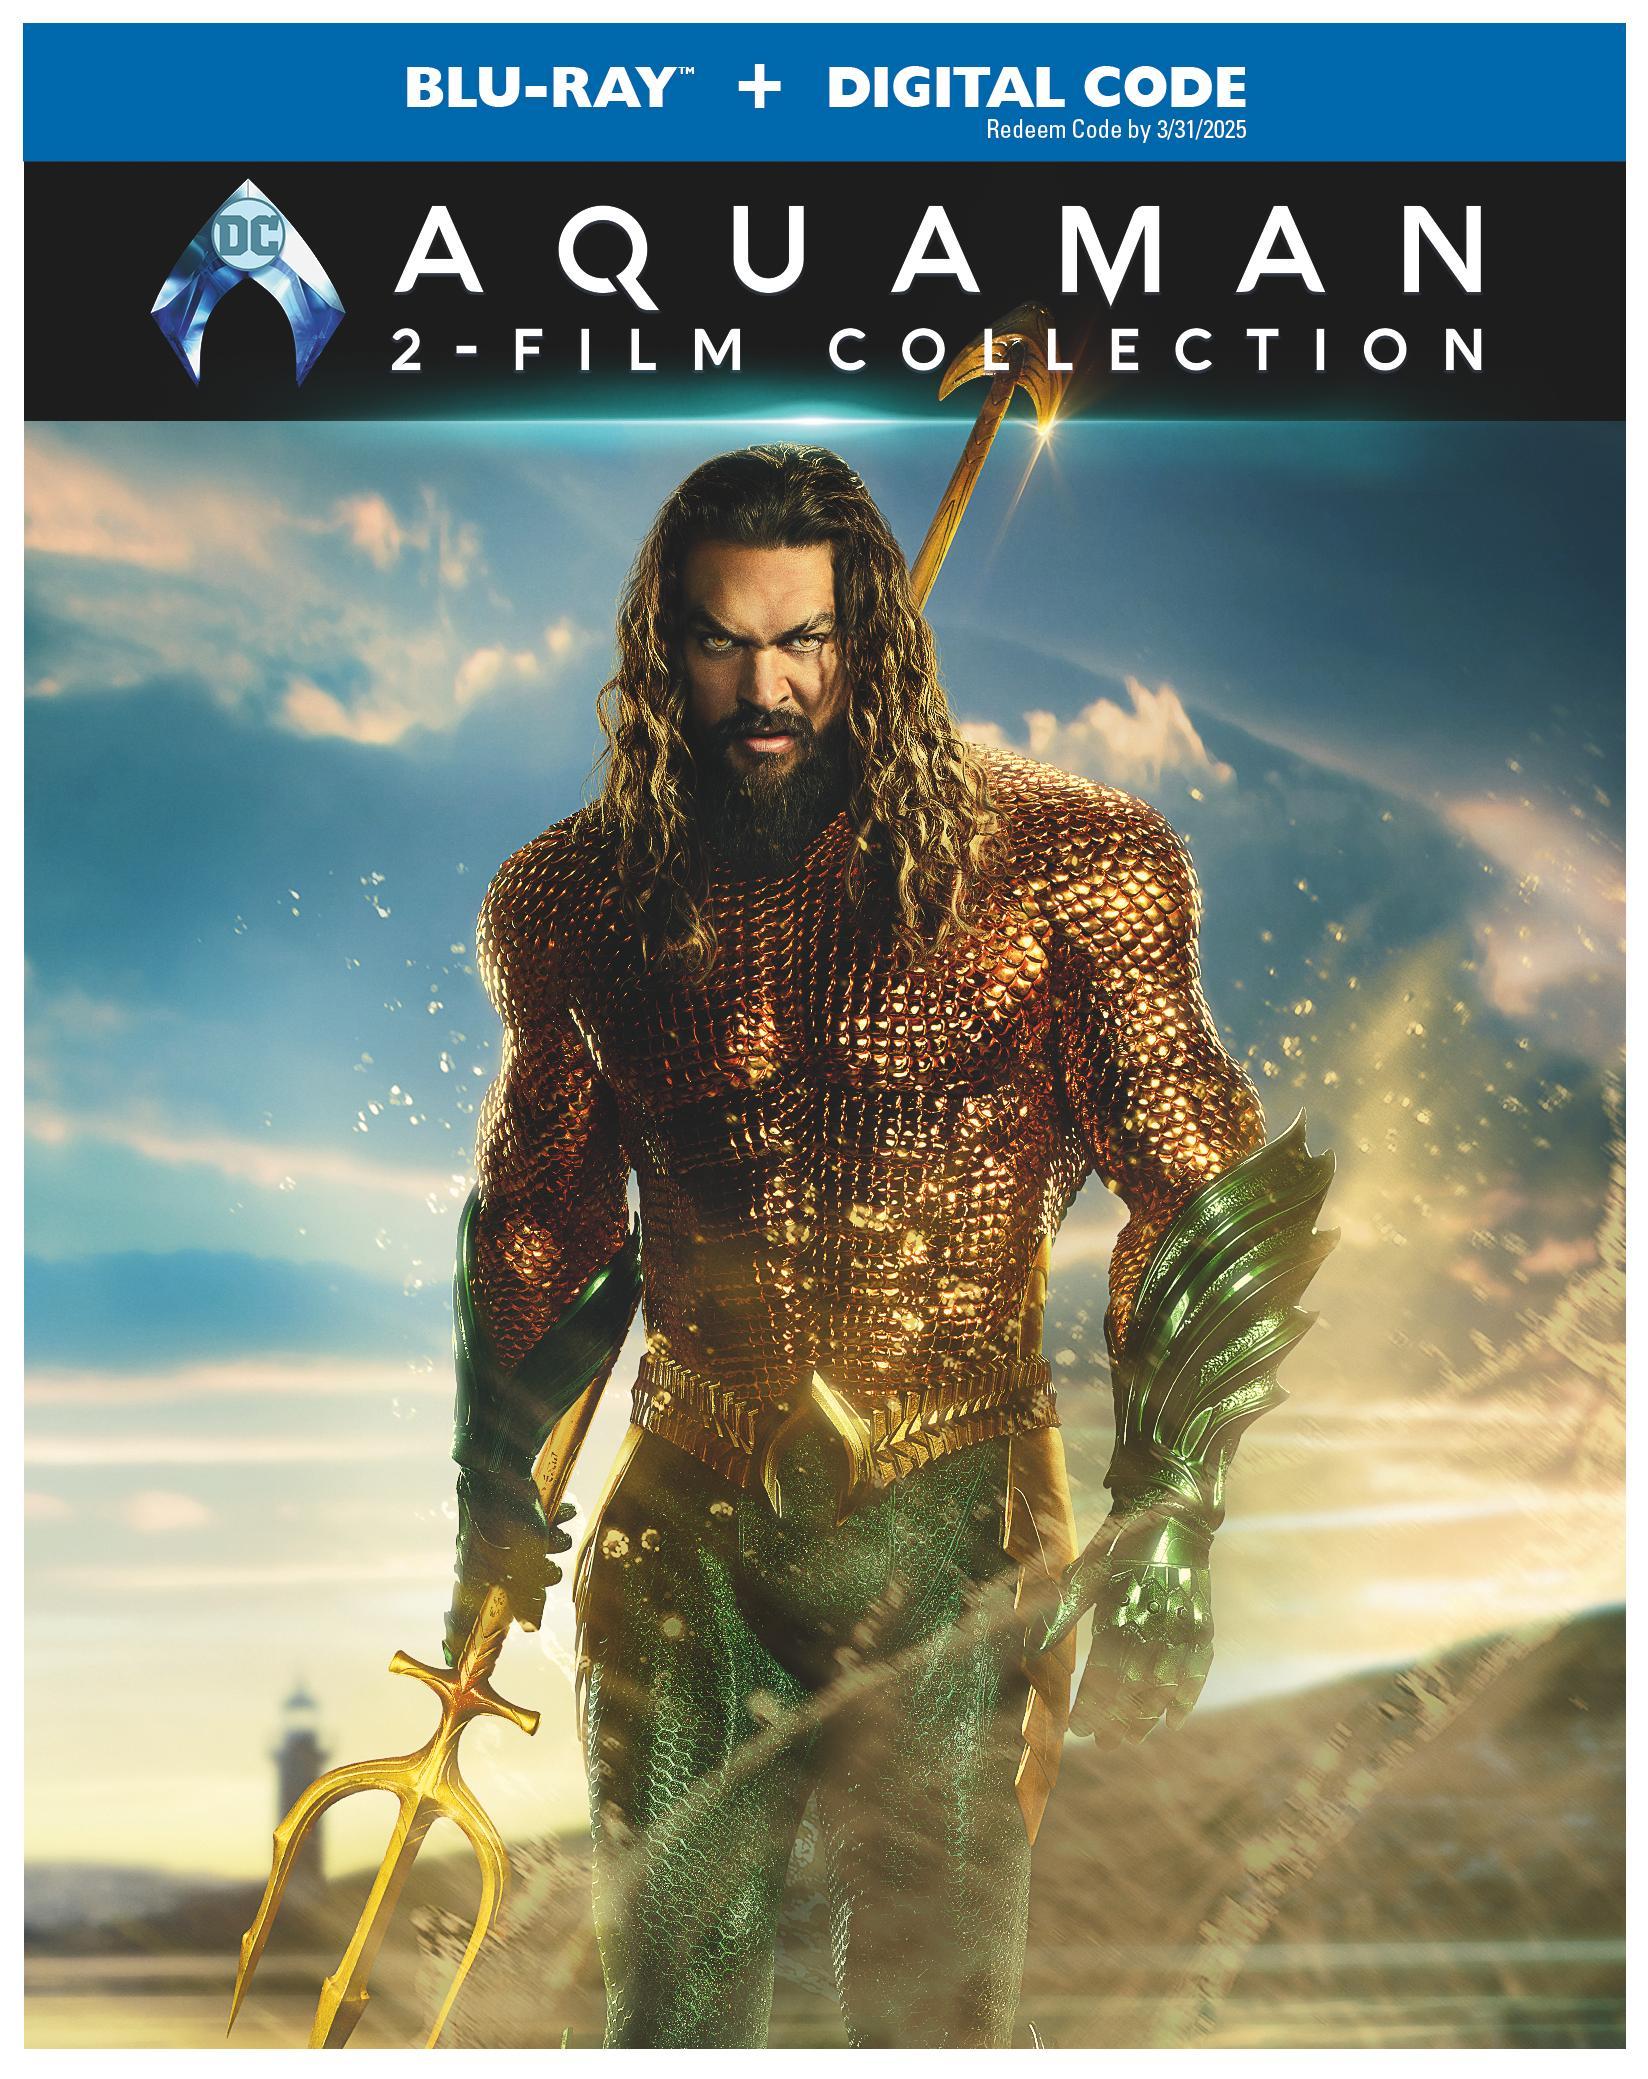 Aquaman 2-Film Collection - Blu-ray   - Adventure Movies On Blu-ray - Movies On GRUV